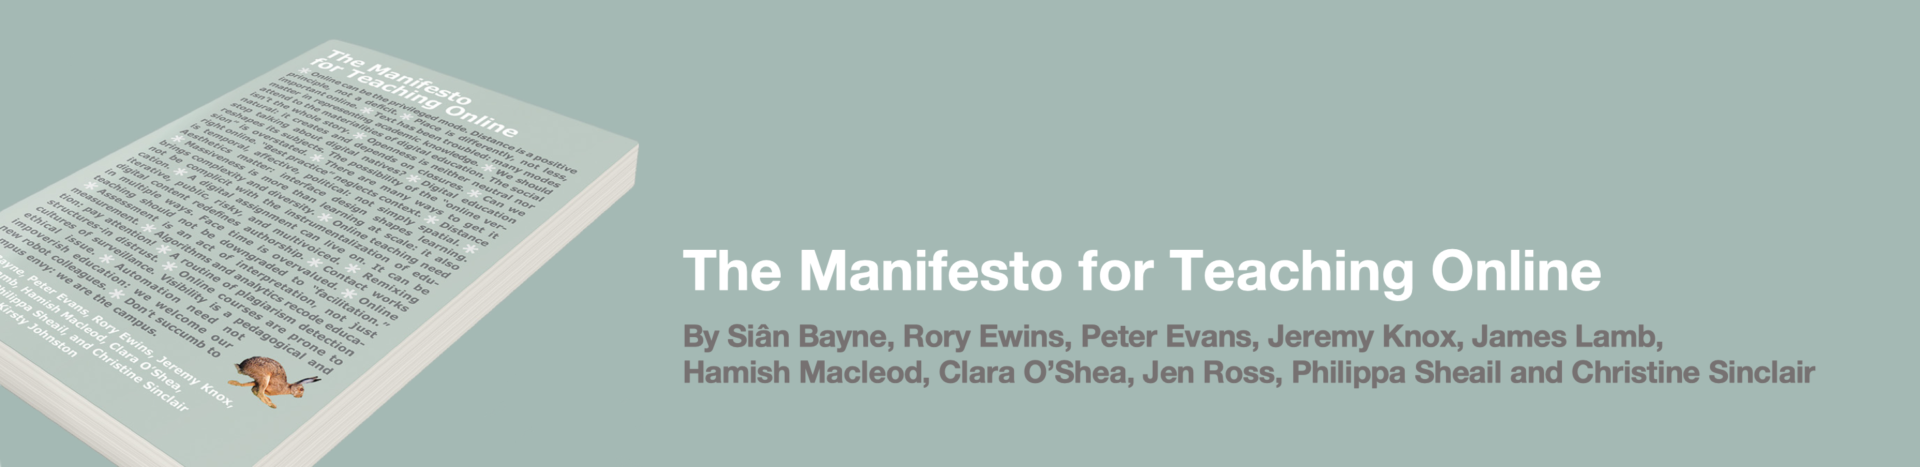 Manifesto video, 2013 remix